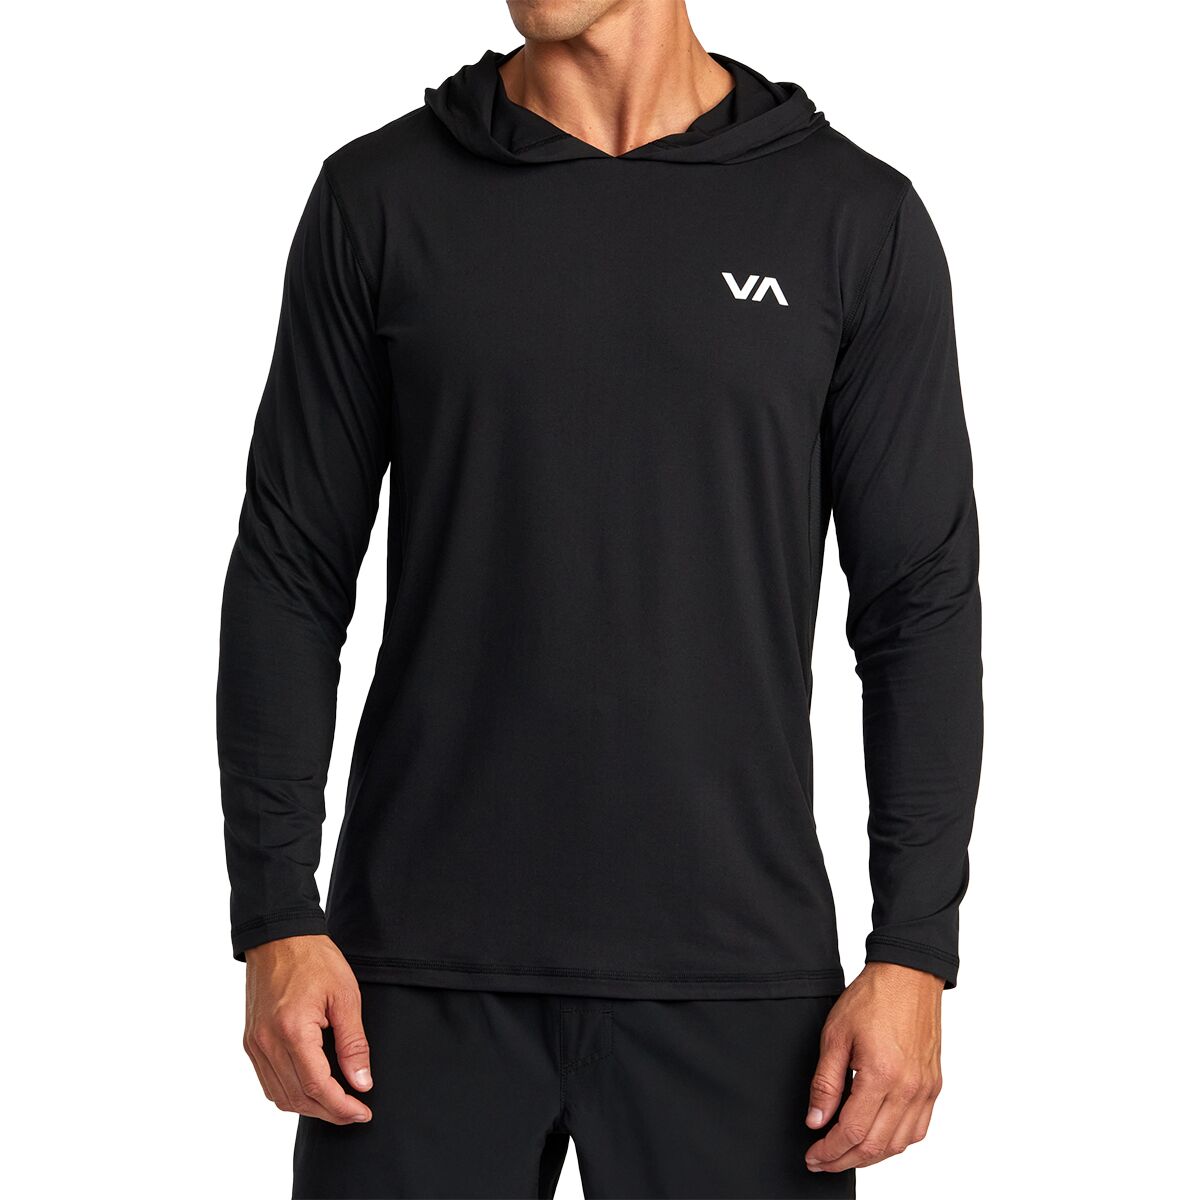 RVCA Sport Vent Long-Sleeve Hood Top - Men's